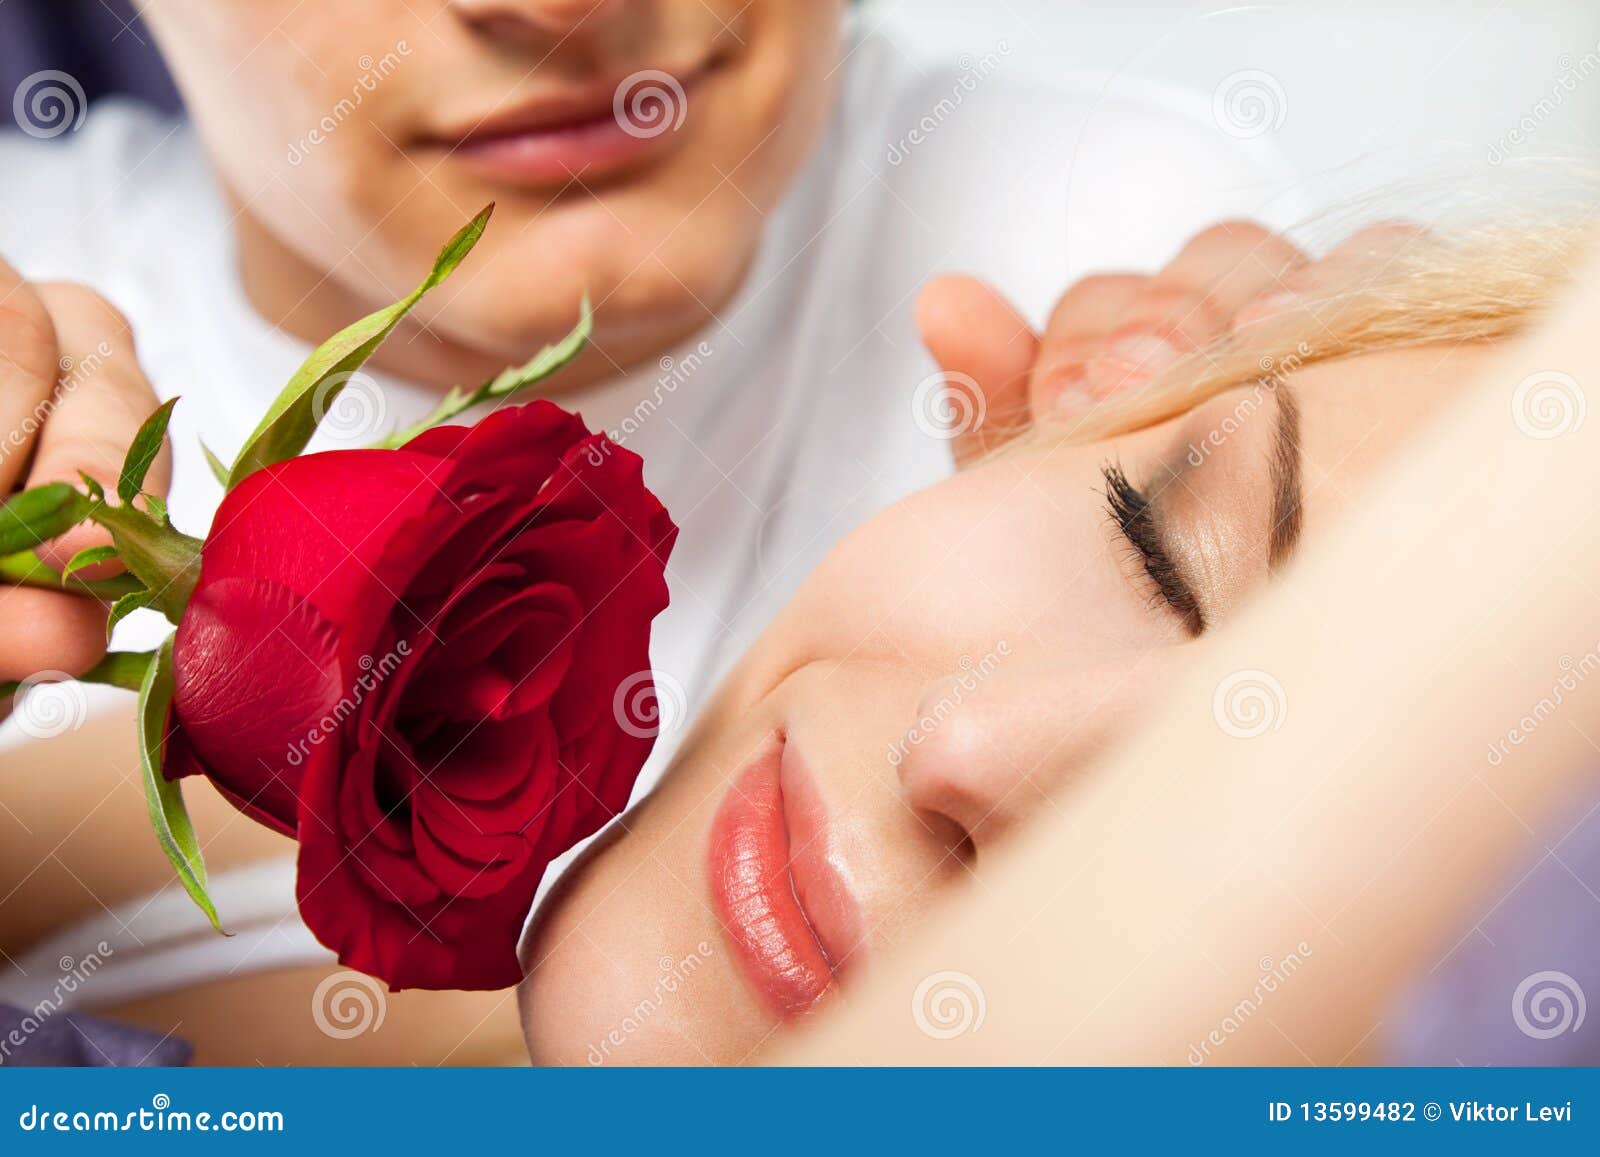 Morning couple rose stock photo. Image of rose, romantic - 13599482